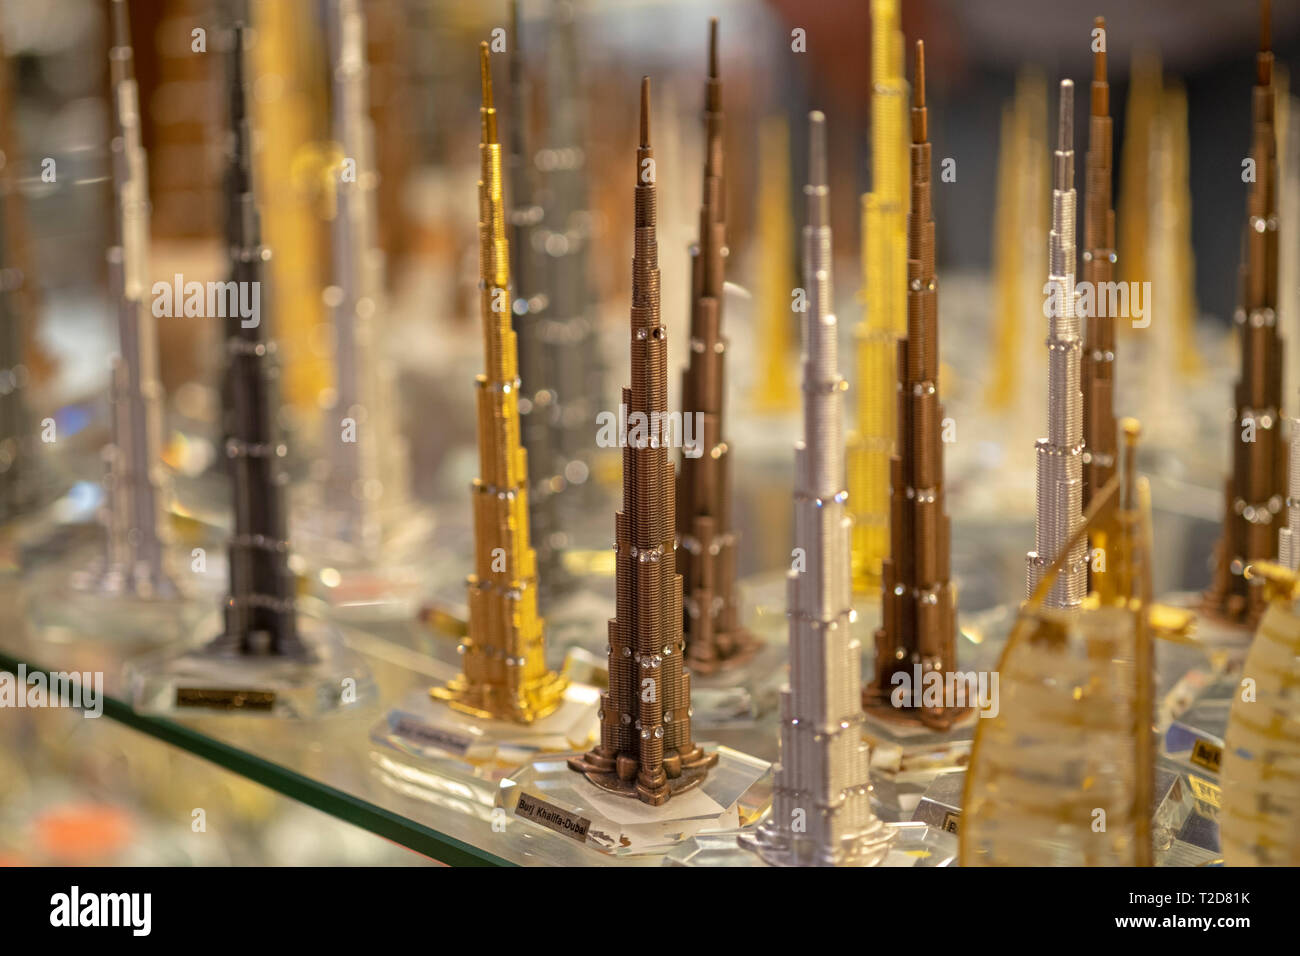 Wolkenkratzer Burj Khalifa miniatur Souvenirs in Dubai, Vereinigte Arabische Emirate Stockfoto